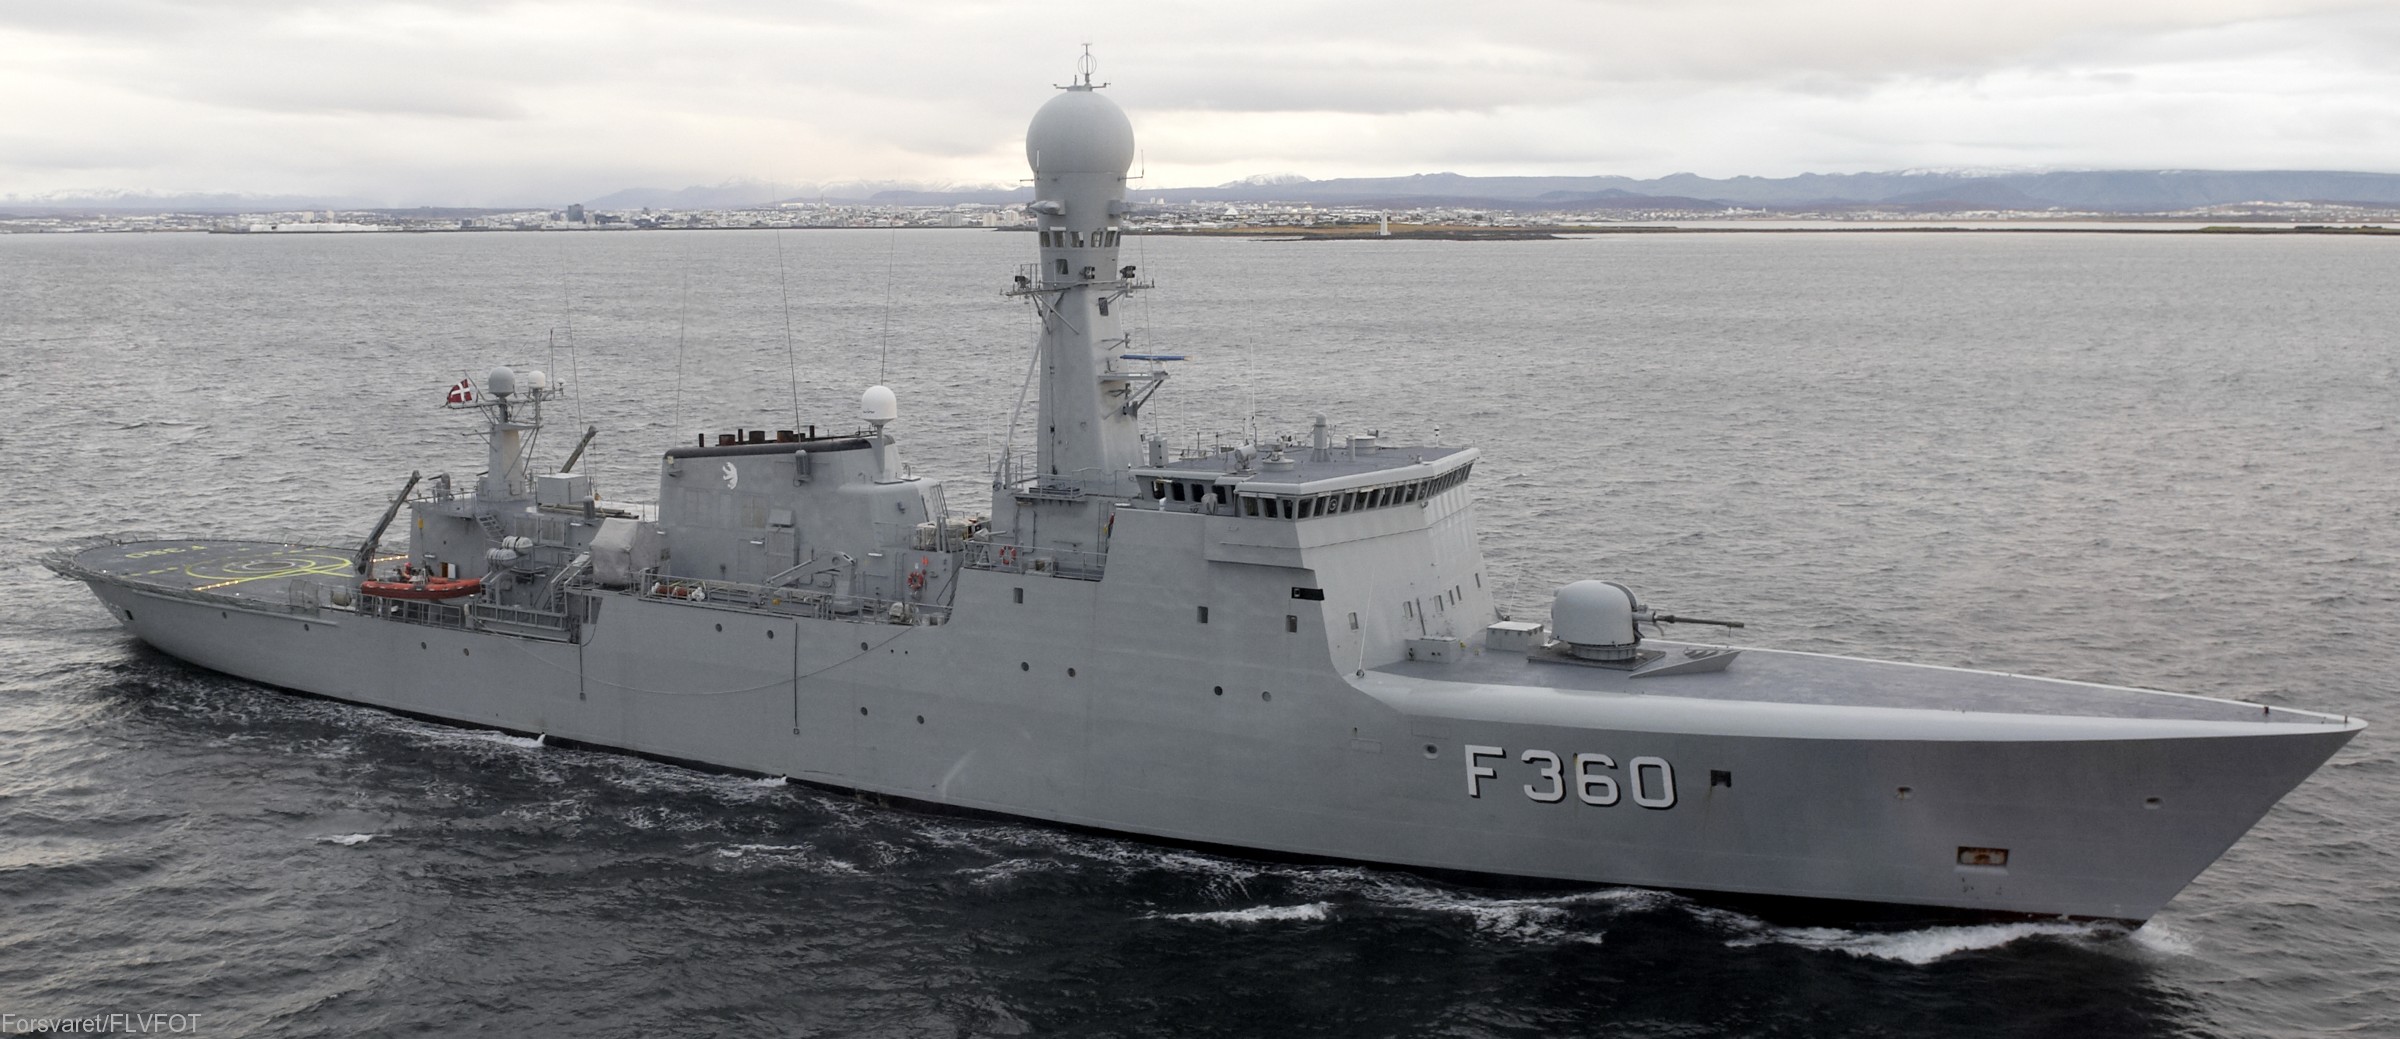 f-360 hdms hvidbjornen thetis class ocean patrol frigate royal danish navy kongelige danske marine kdm inspektionsskibet 16